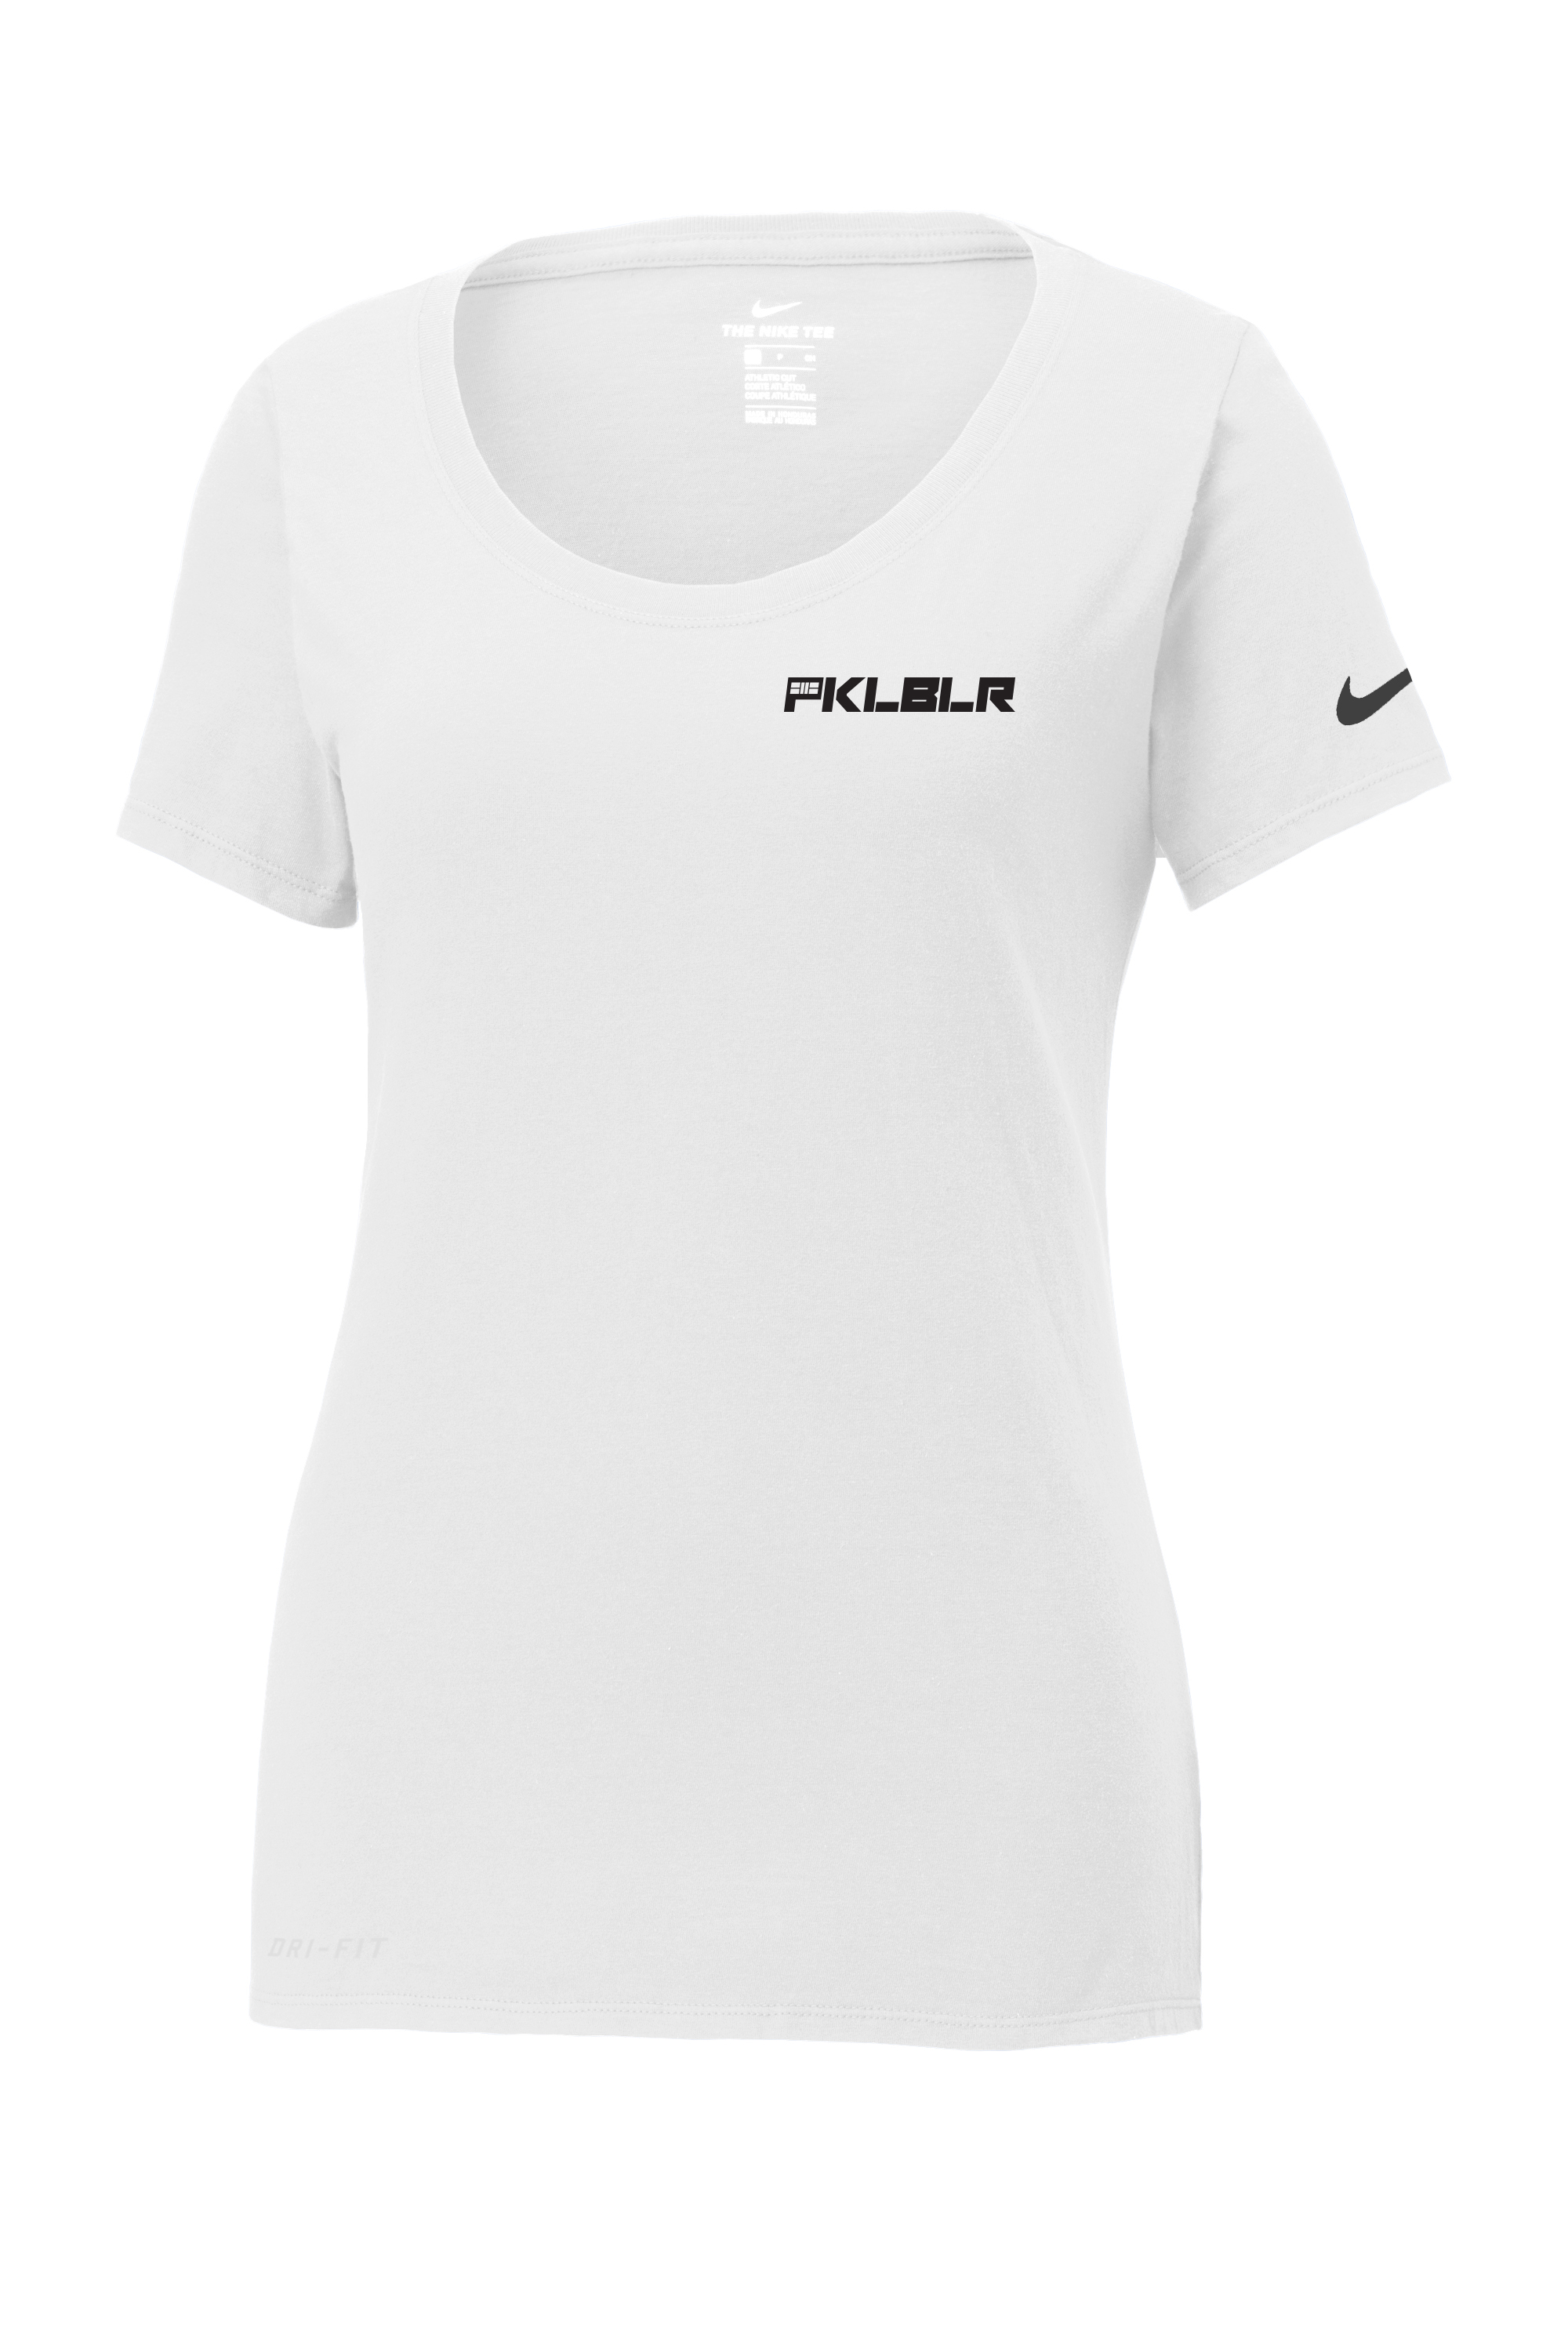 Nike Ladies Dri-FIT Cotton/Poly Scoop Neck Pickleball T